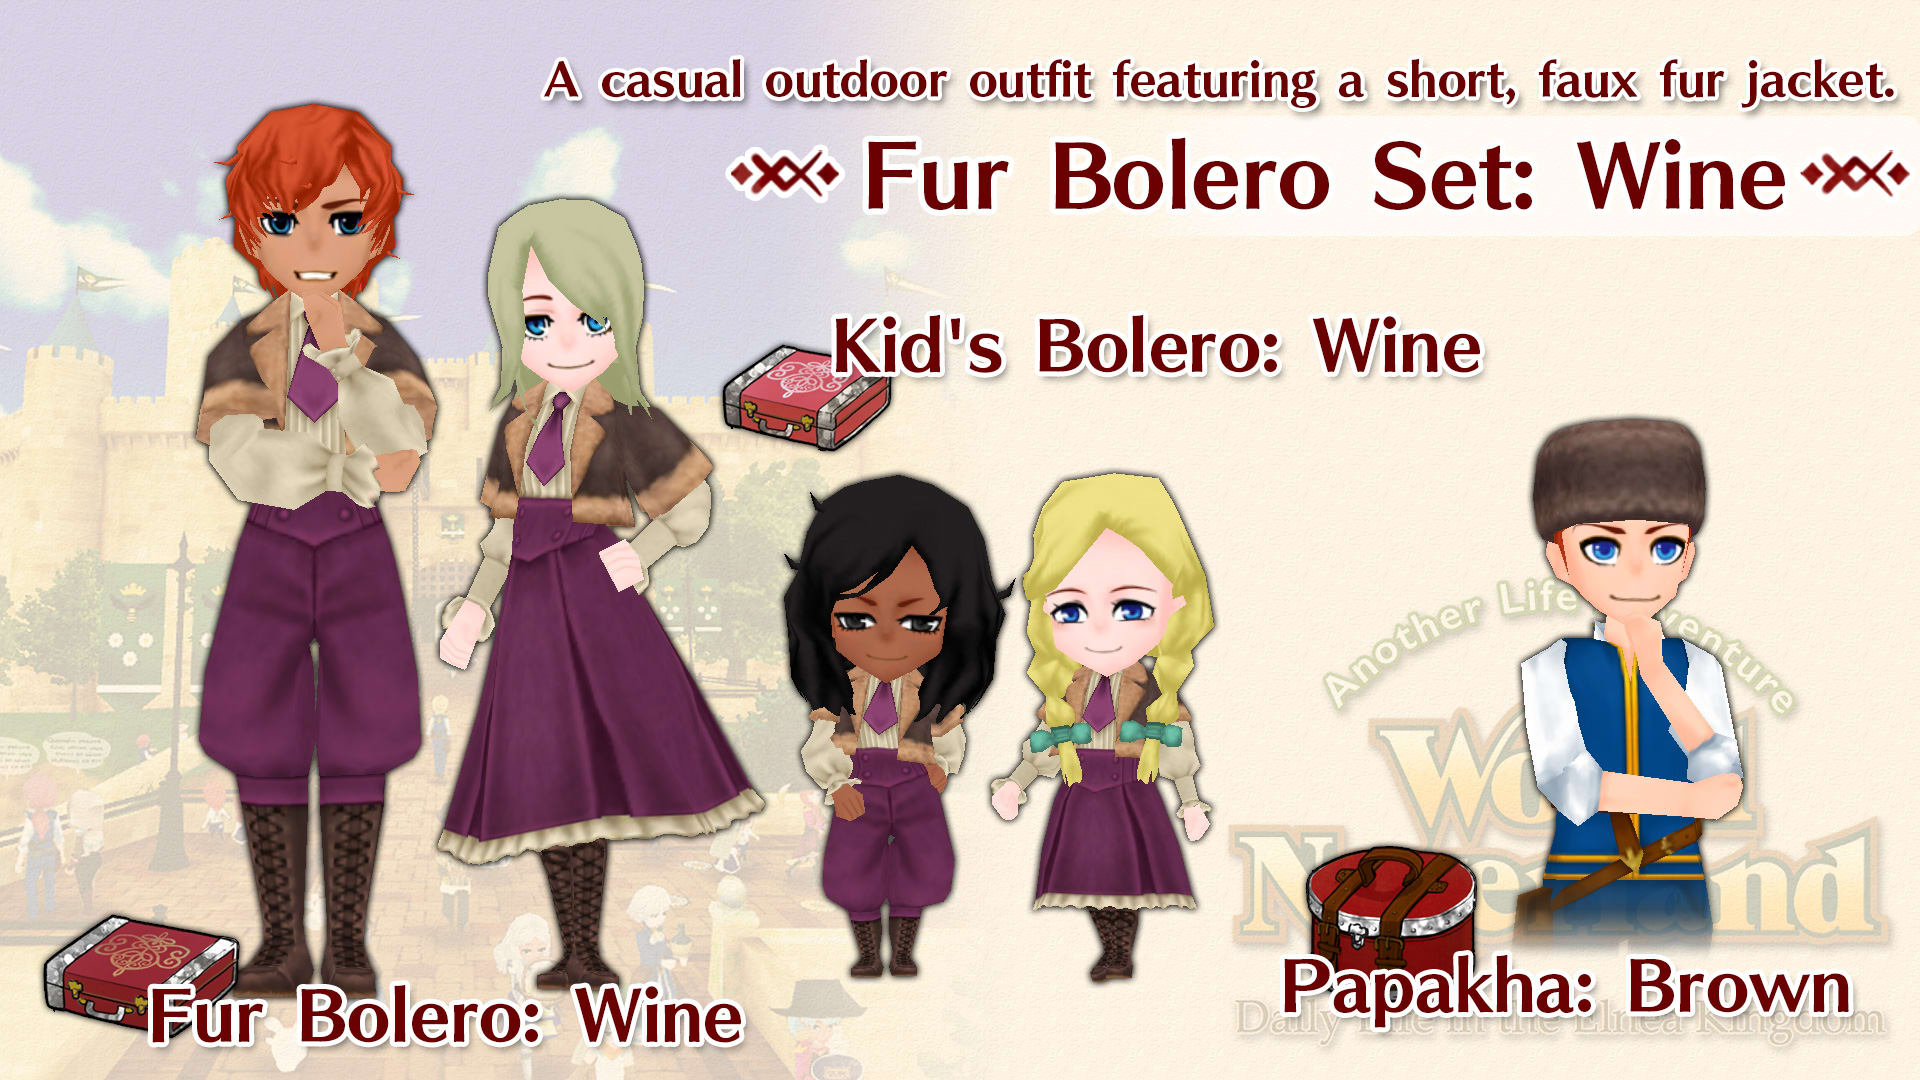 Fur Bolero Set: Wine